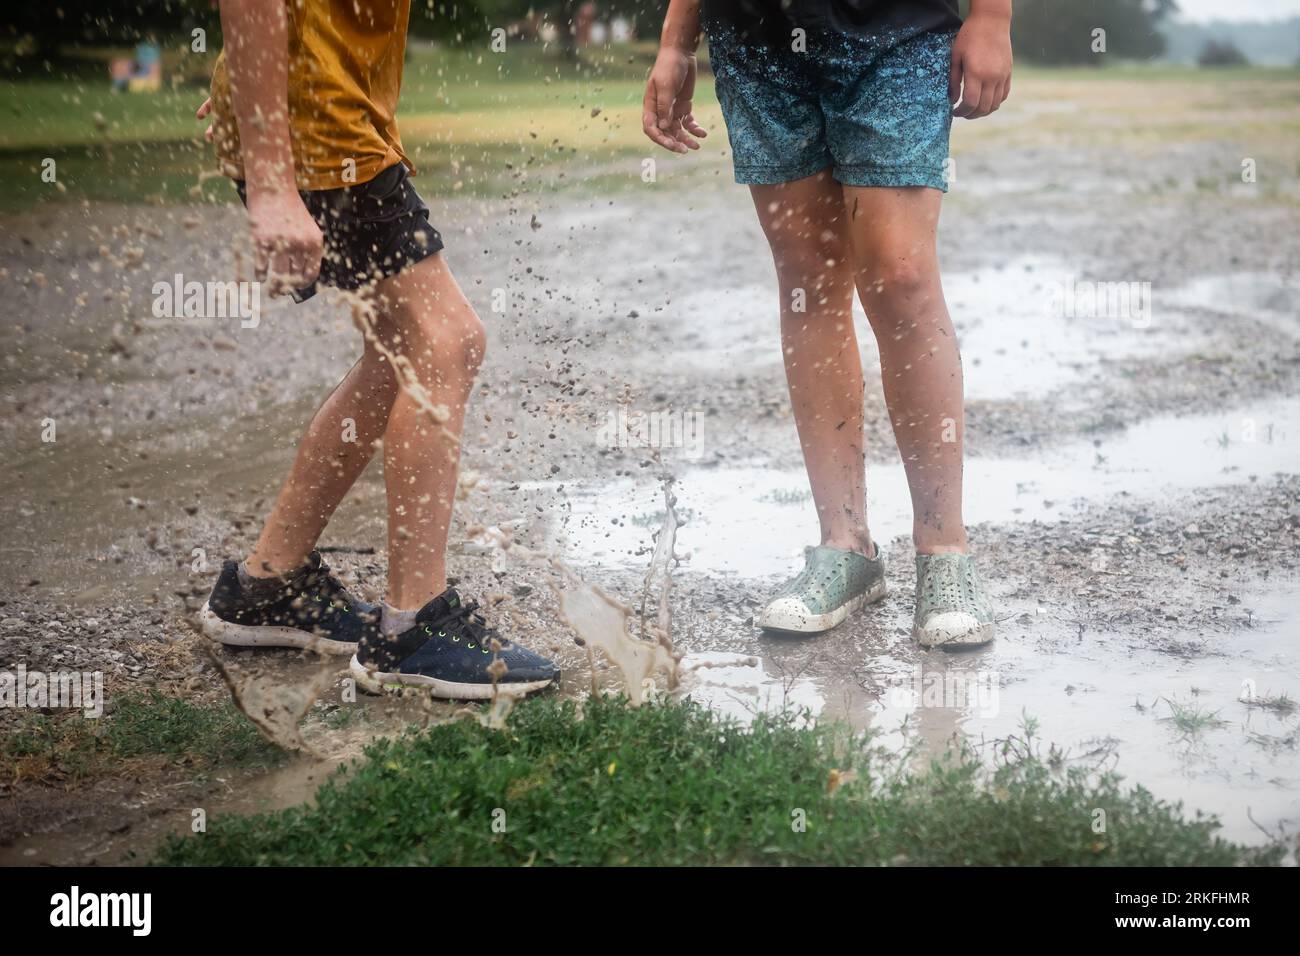 Kids splashing in mud puddle in the rain Stock Photo